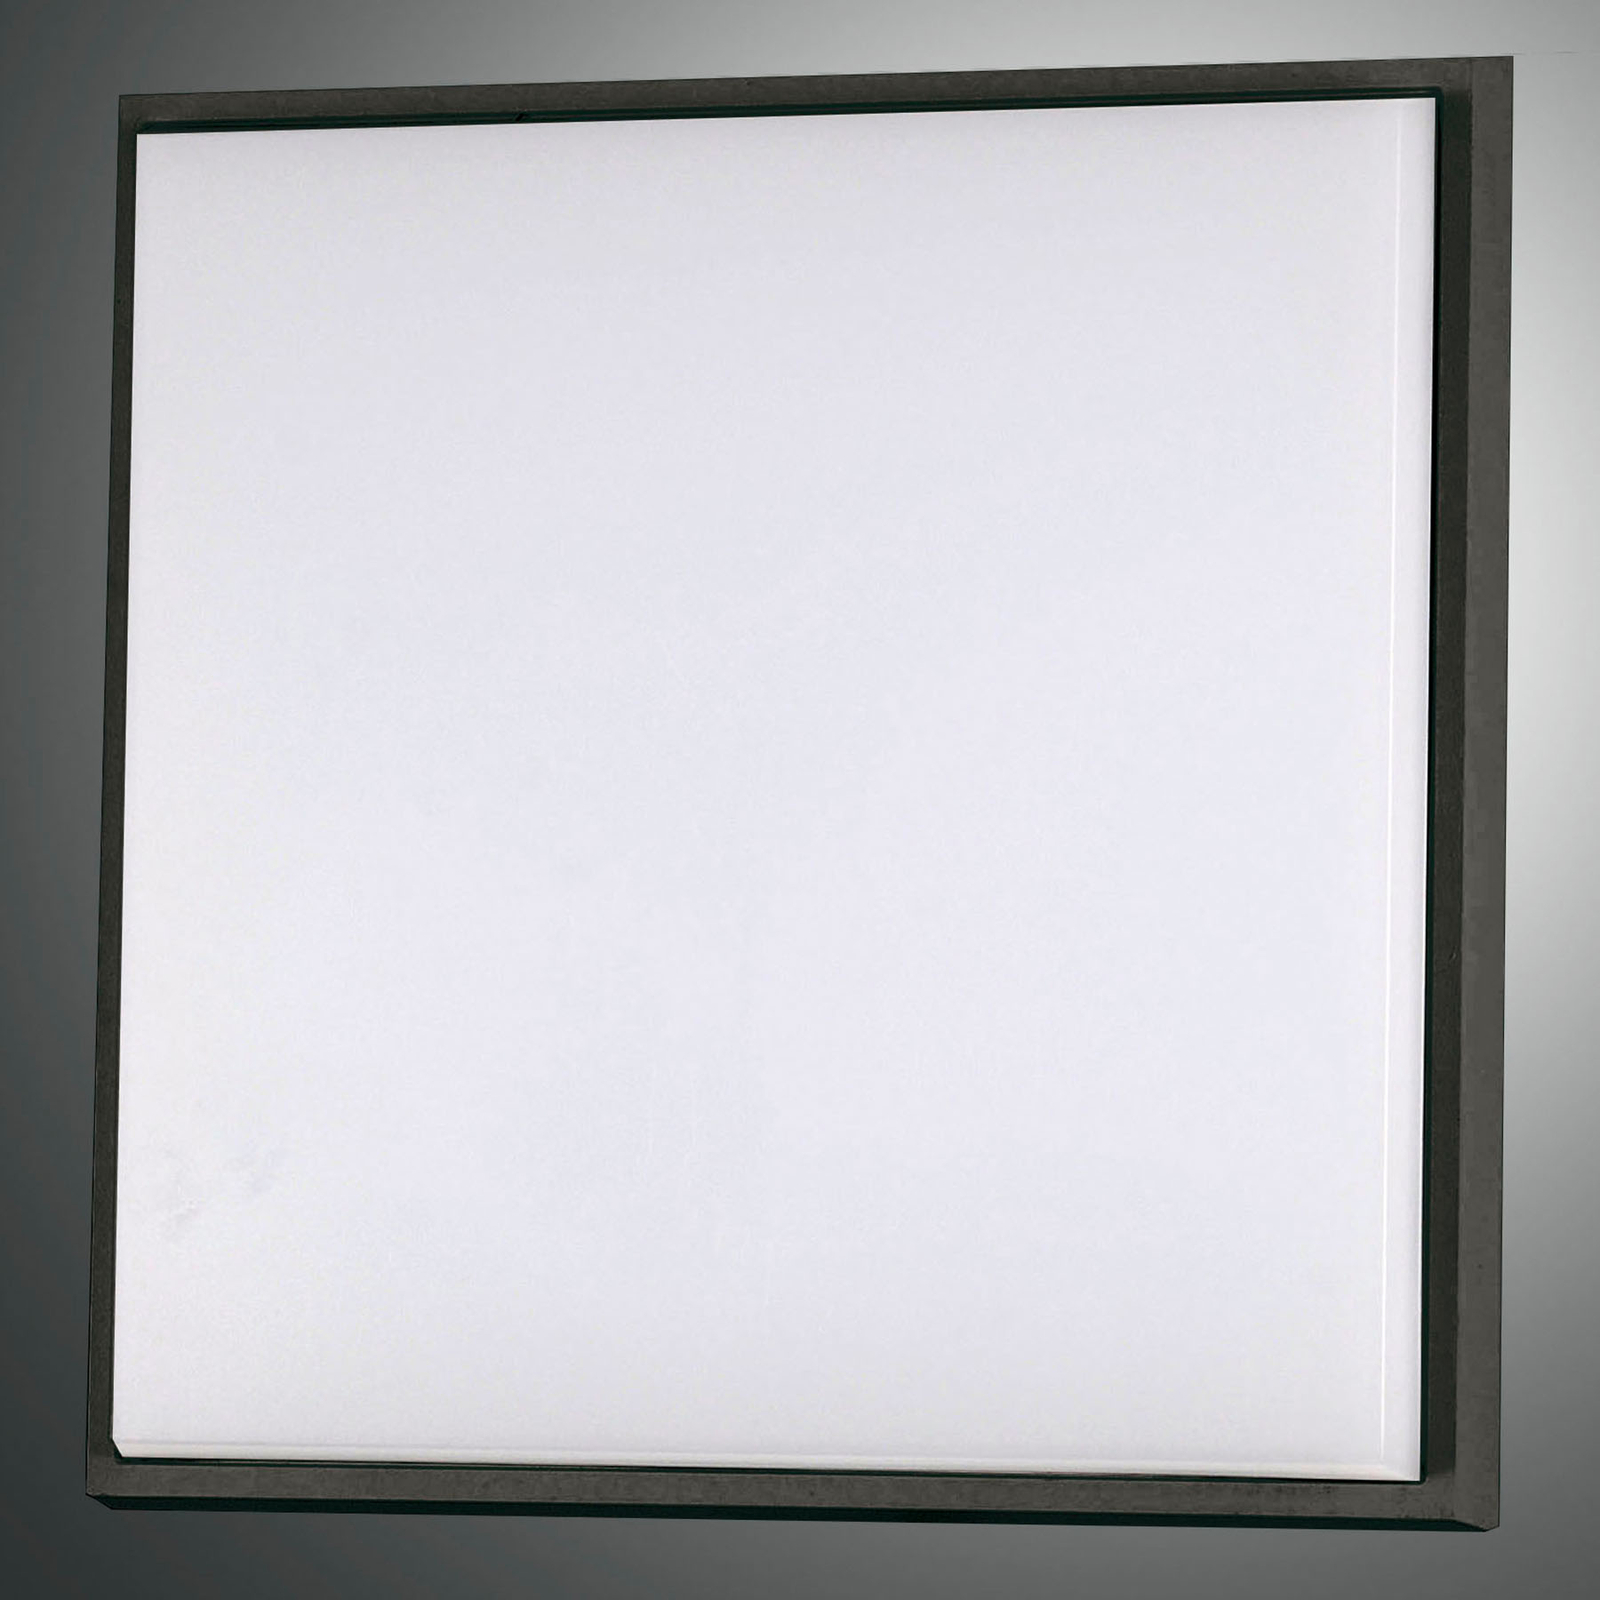 LED ceiling light Desdy, 30x30 cm, IP54, black